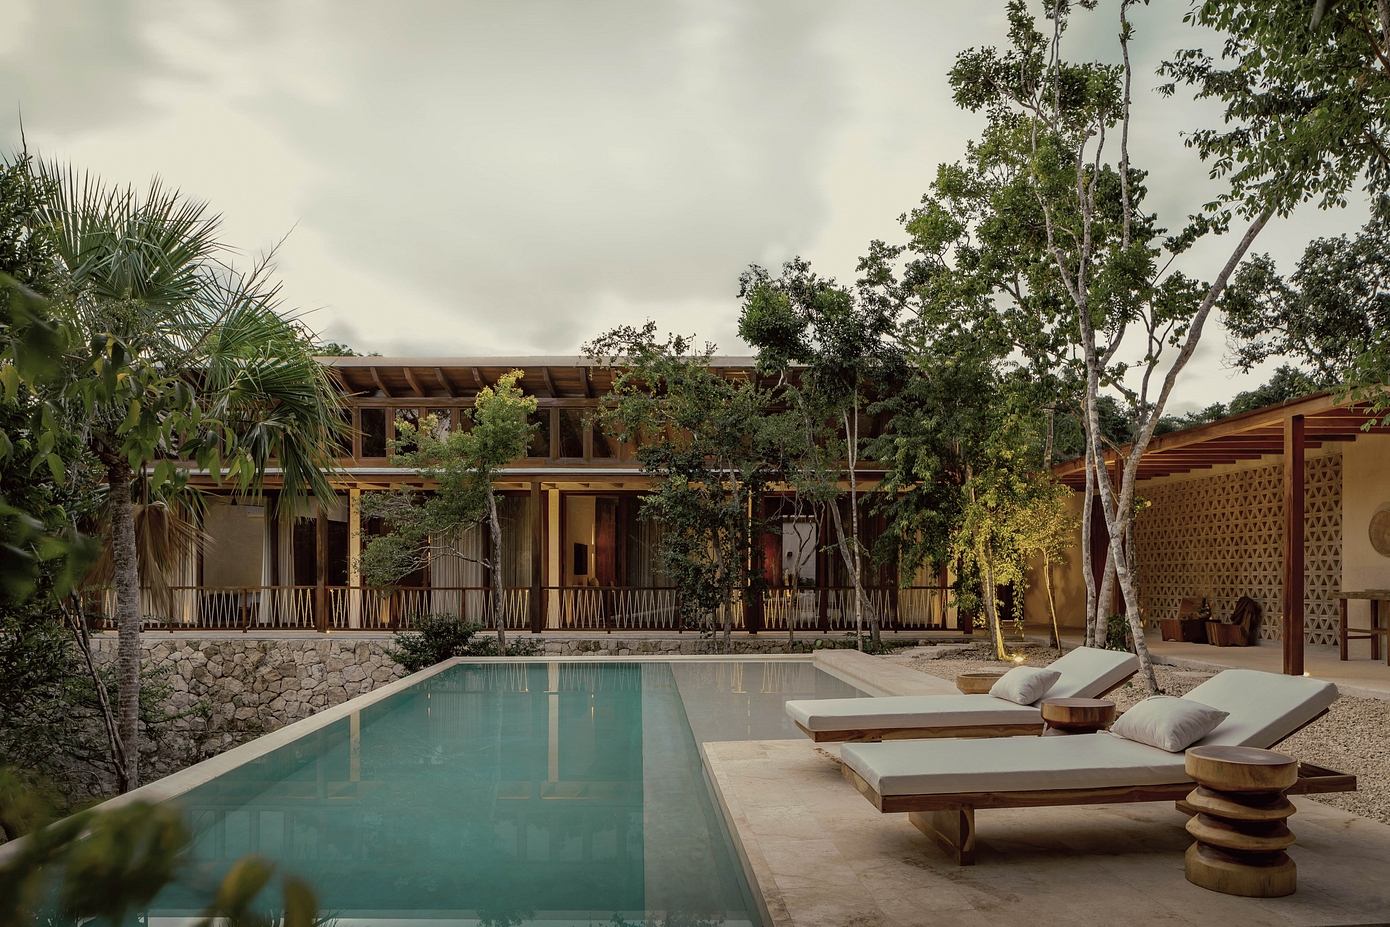 Casa Tropical: Jaque Studio’s Eco-Friendly Home in Mexico